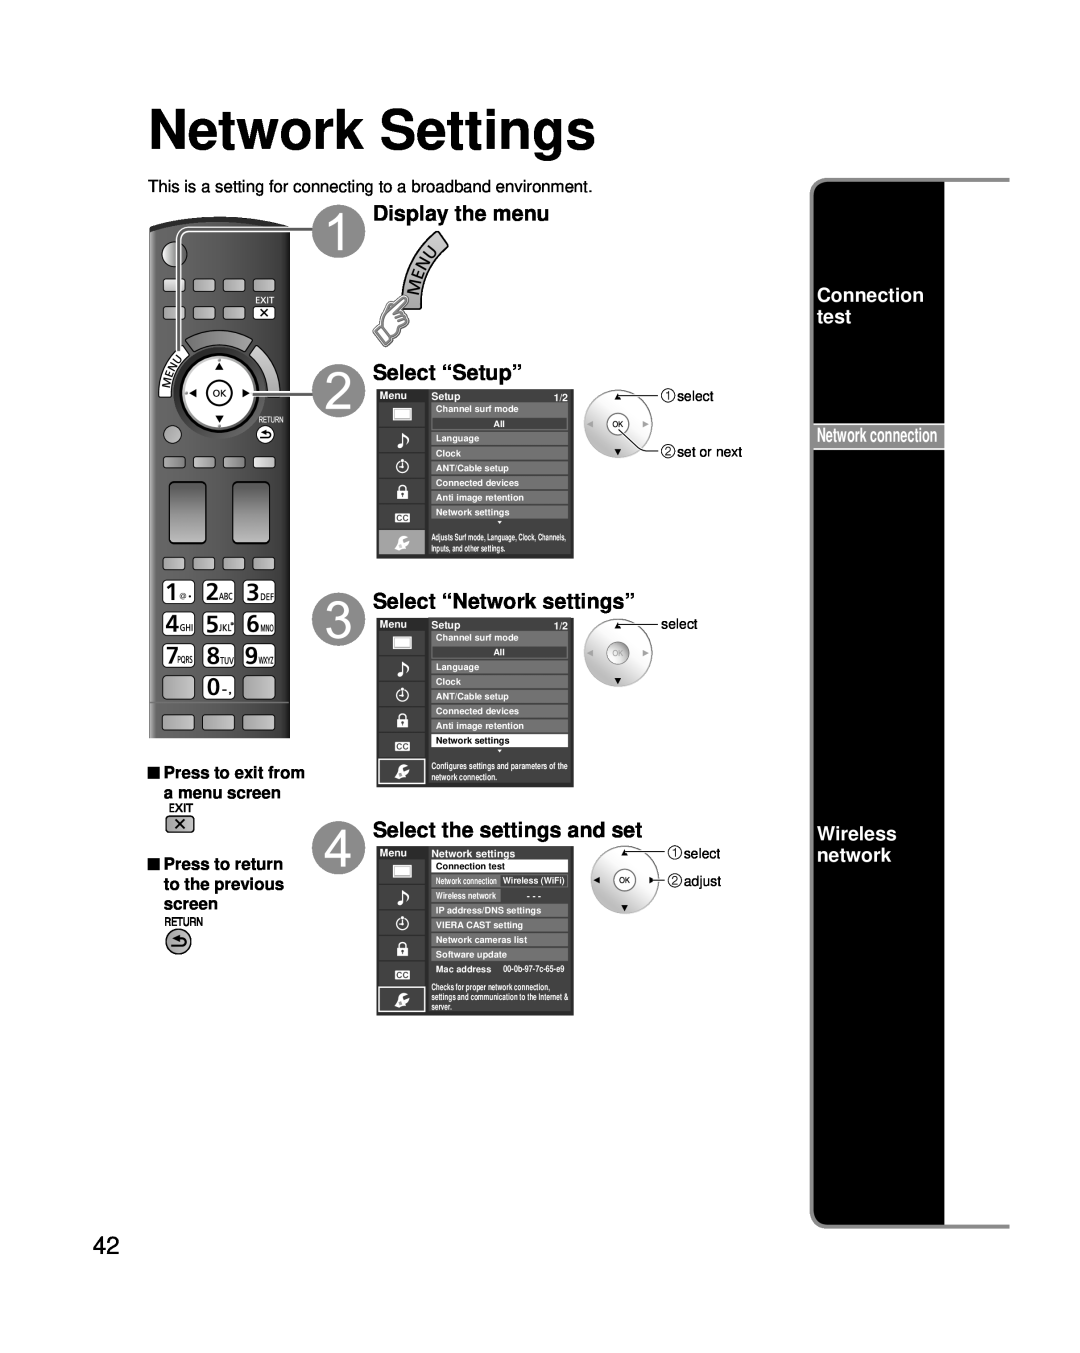 Panasonic TC-P50G25, TC-P42G25 Network Settings, Connection test, Wireless, network, Network connection, Network settings 